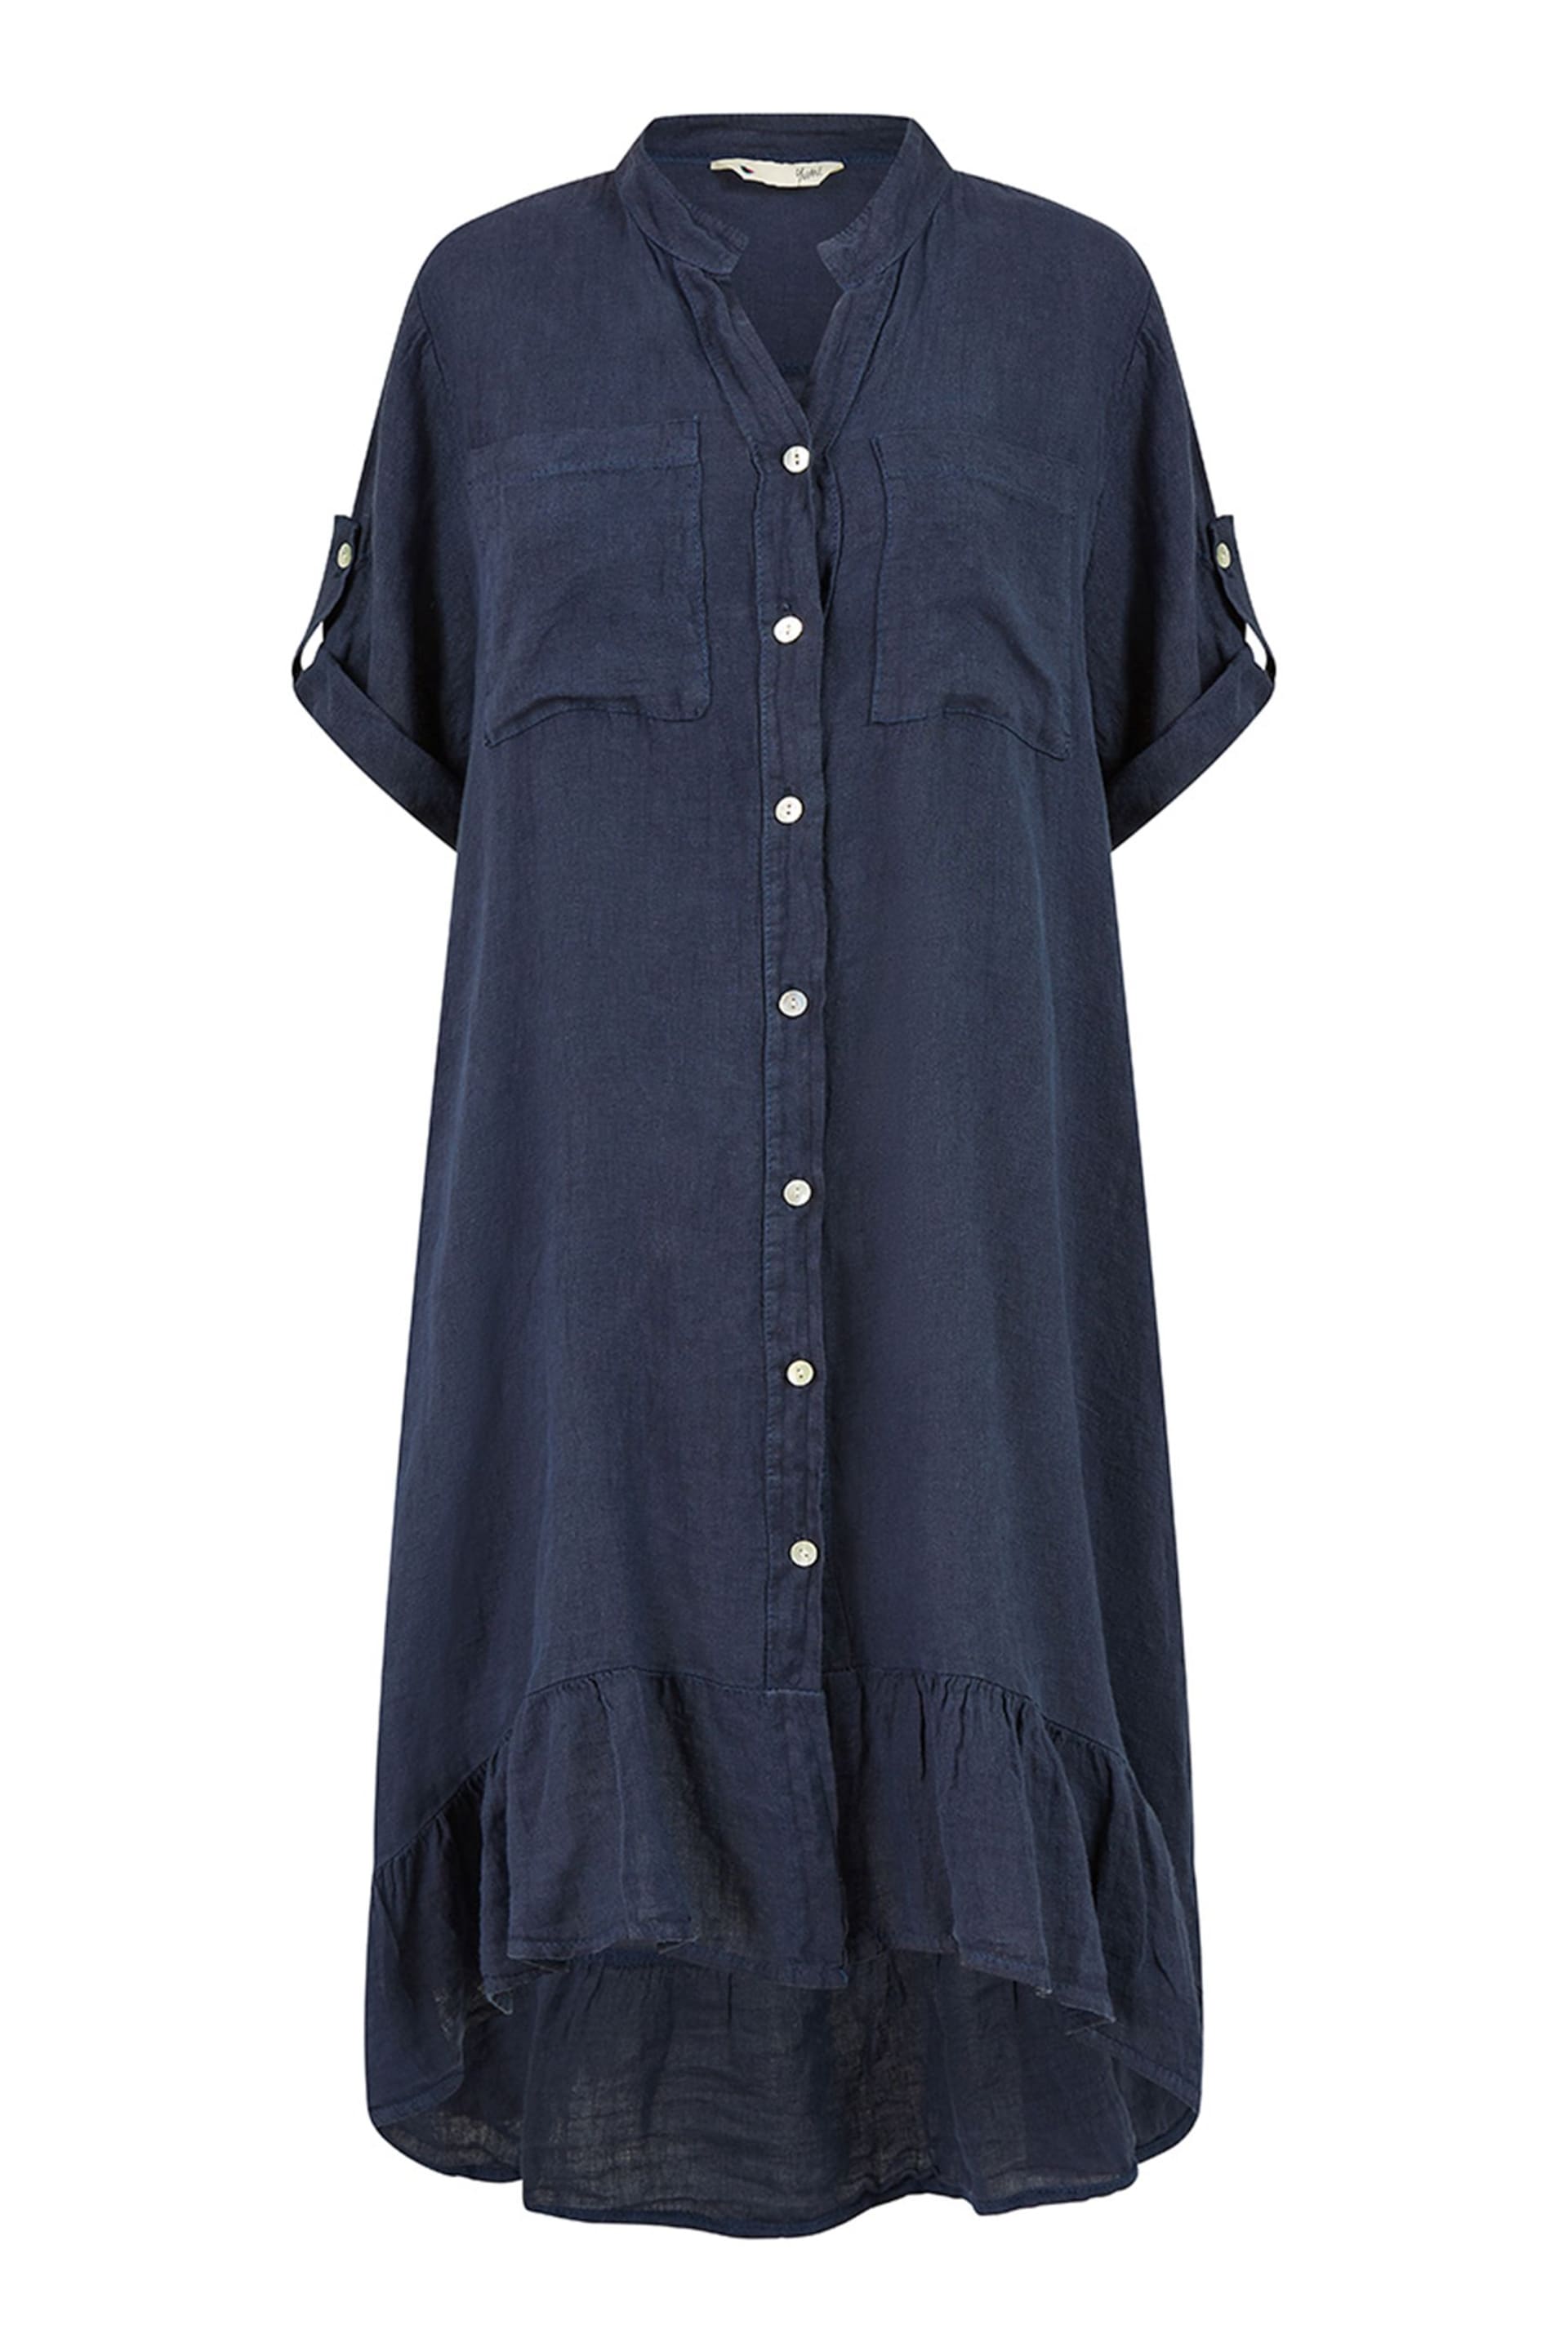 Yumi Blue Italian Linen Shirt Dress With Frill Hem - Image 4 of 4